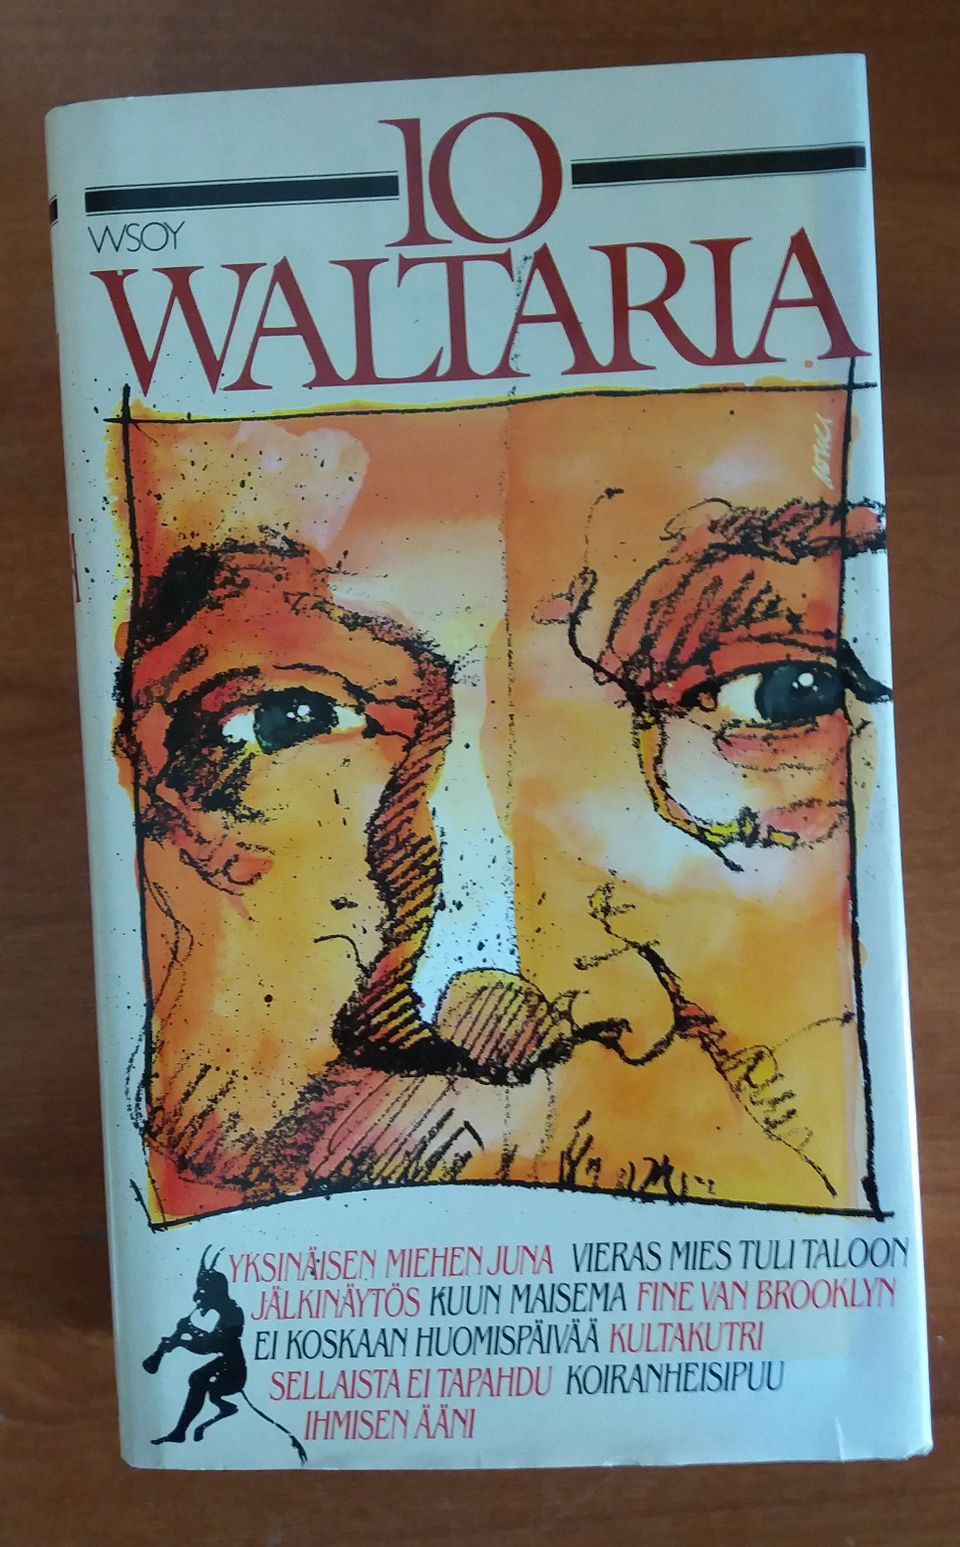 Mika Waltari 10 WALTARIA Wsoy 6p 1990